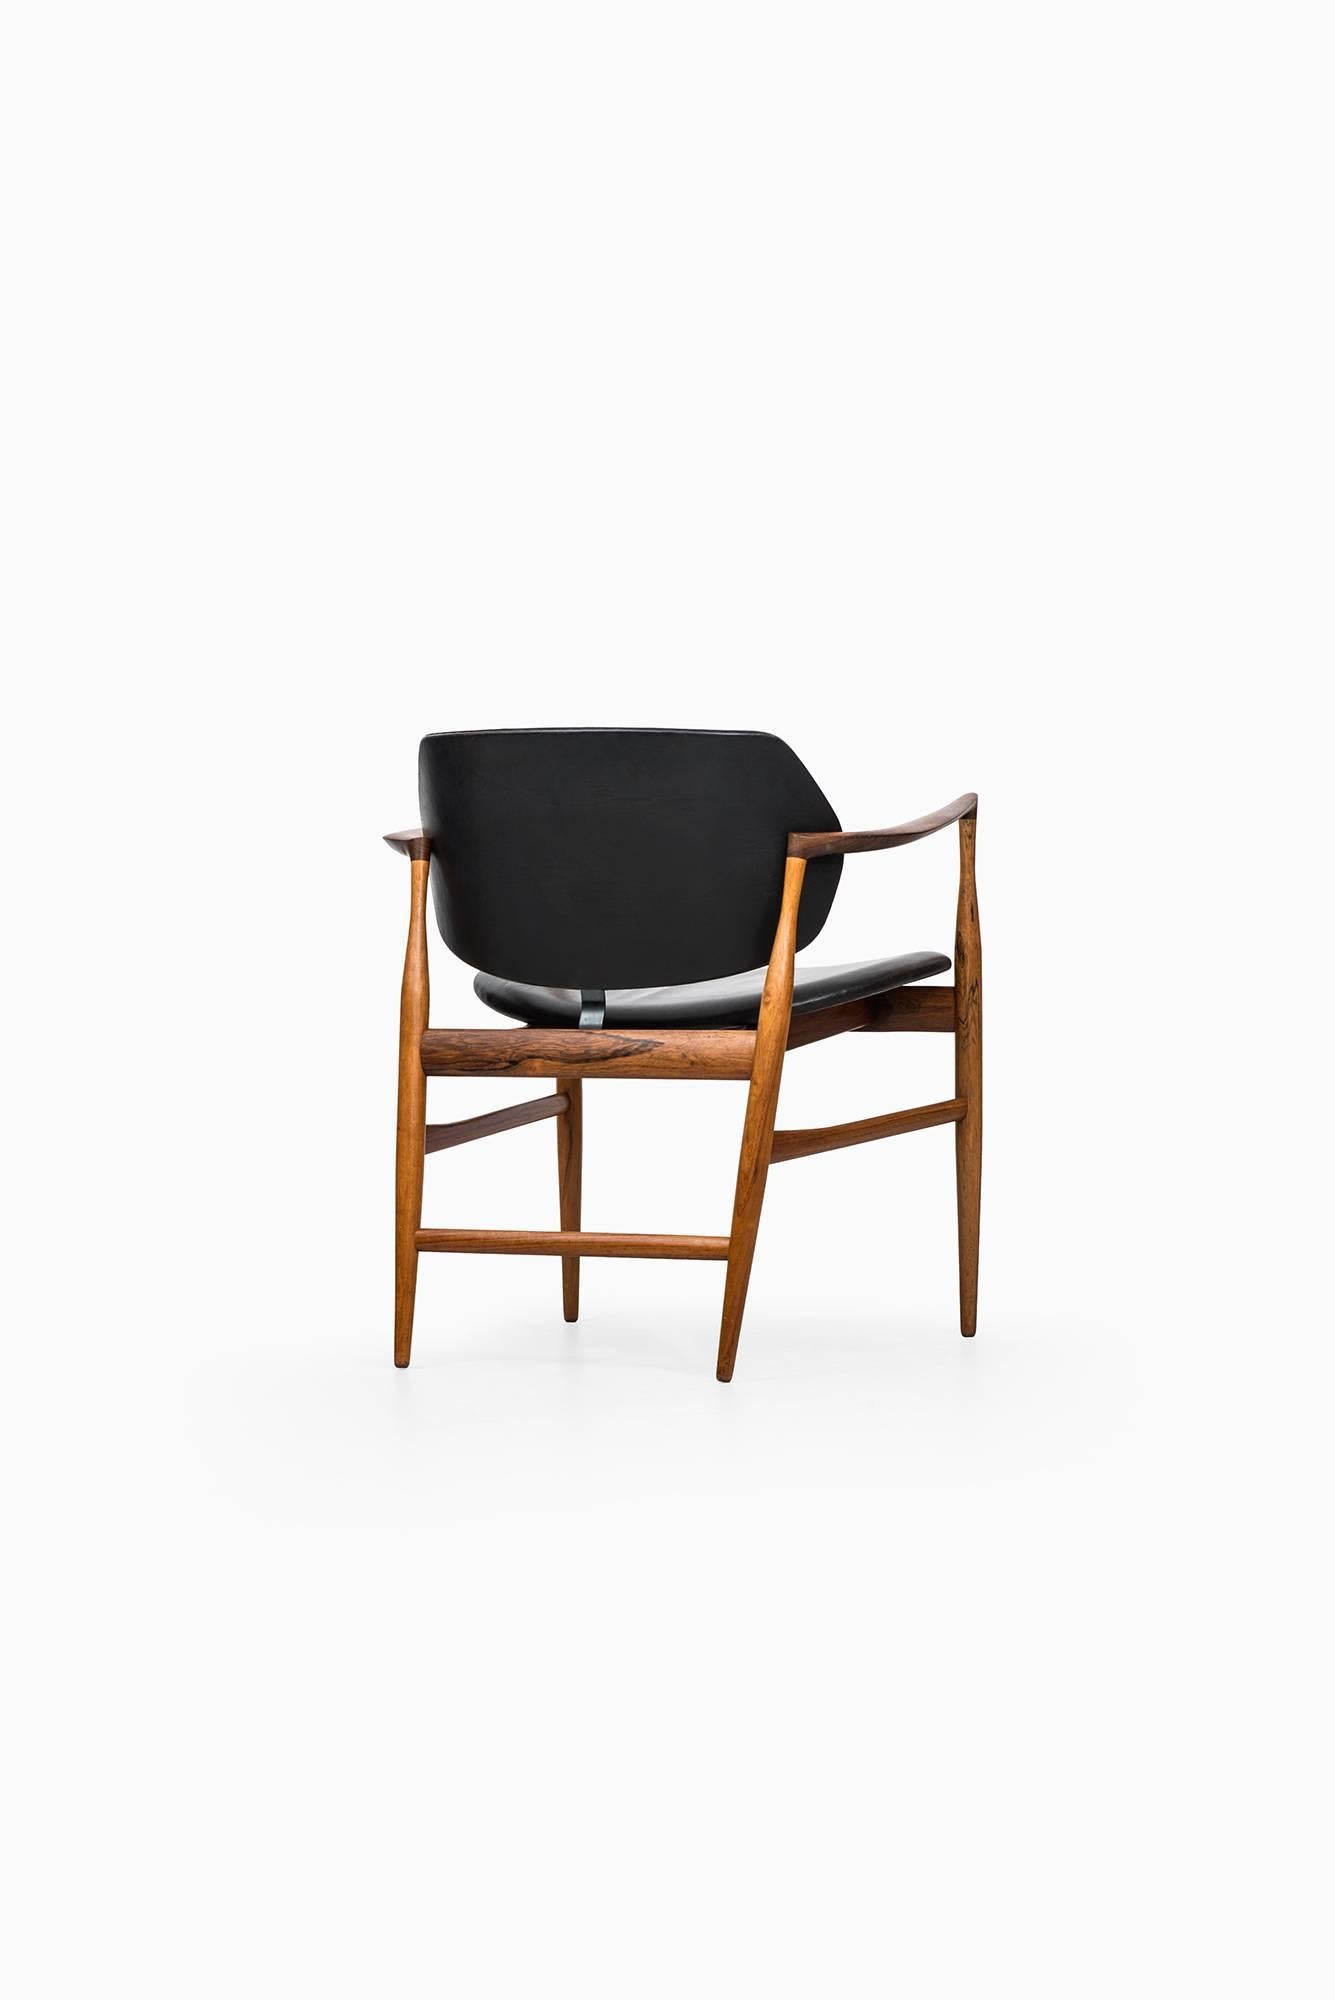 Very rare armchair model Elizabeth designed by Ib Kofod-Larsen. Produced by Christensen & Larsen in Denmark.